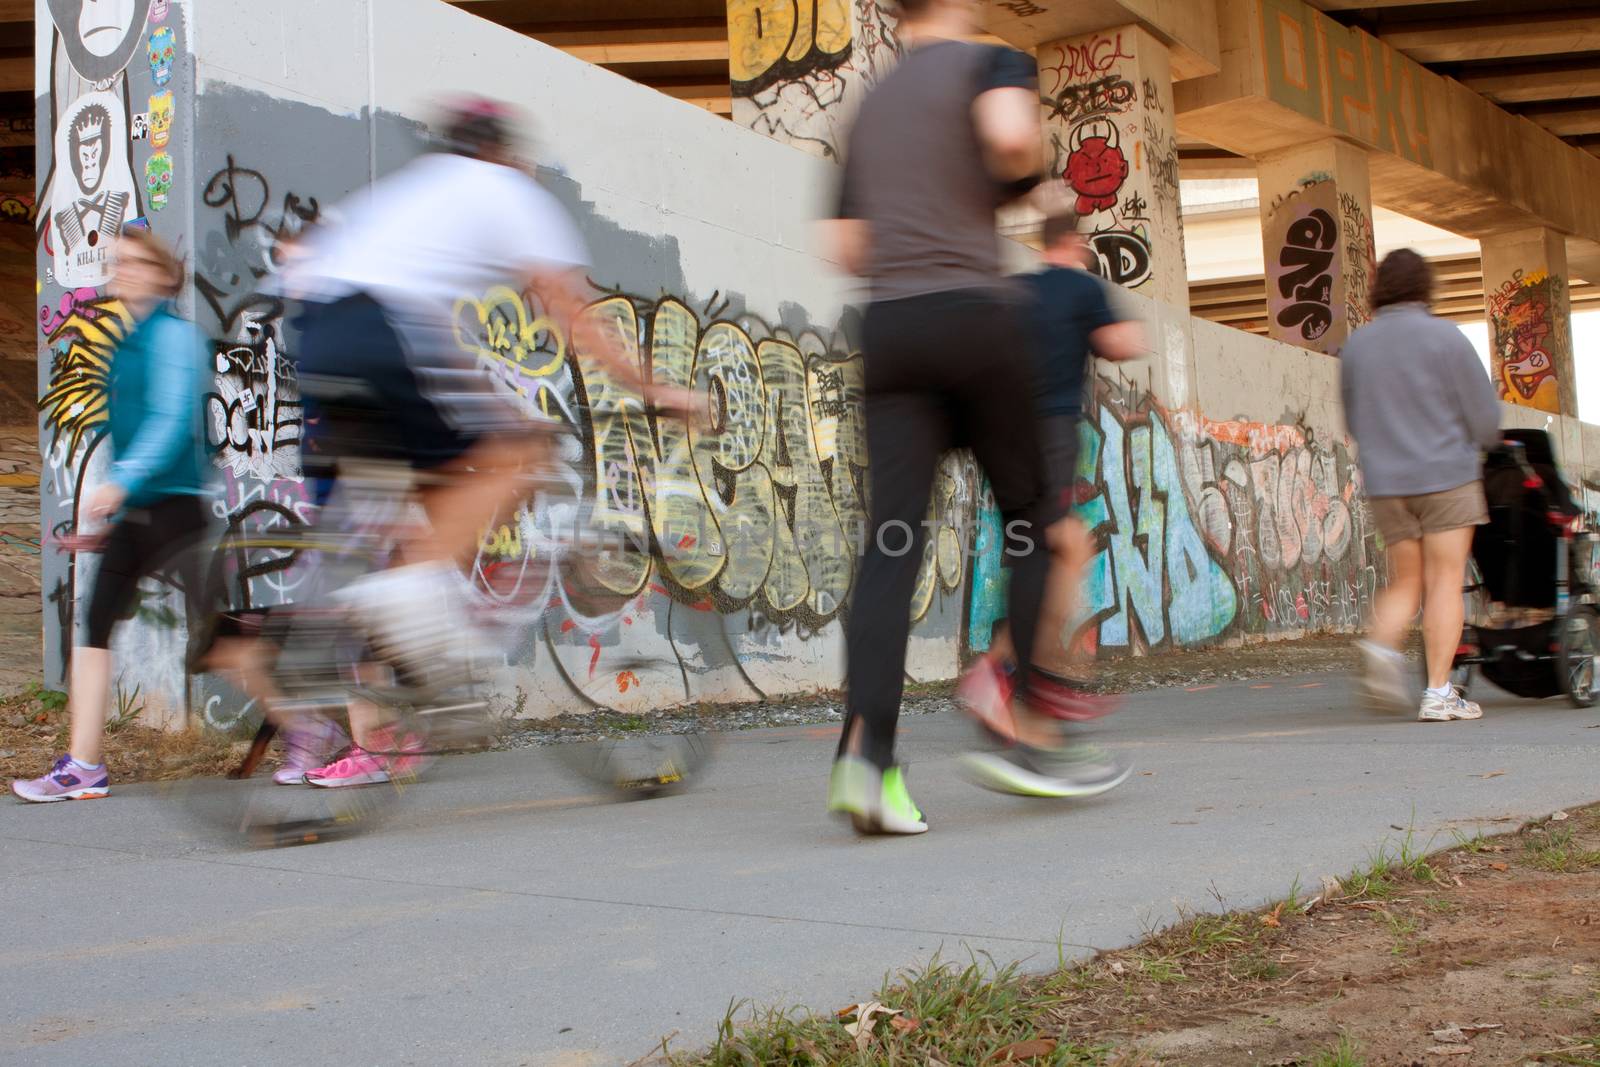 Motion Blur Of People Exercising Along Atlanta Beltline Urban Trail by BluIz60